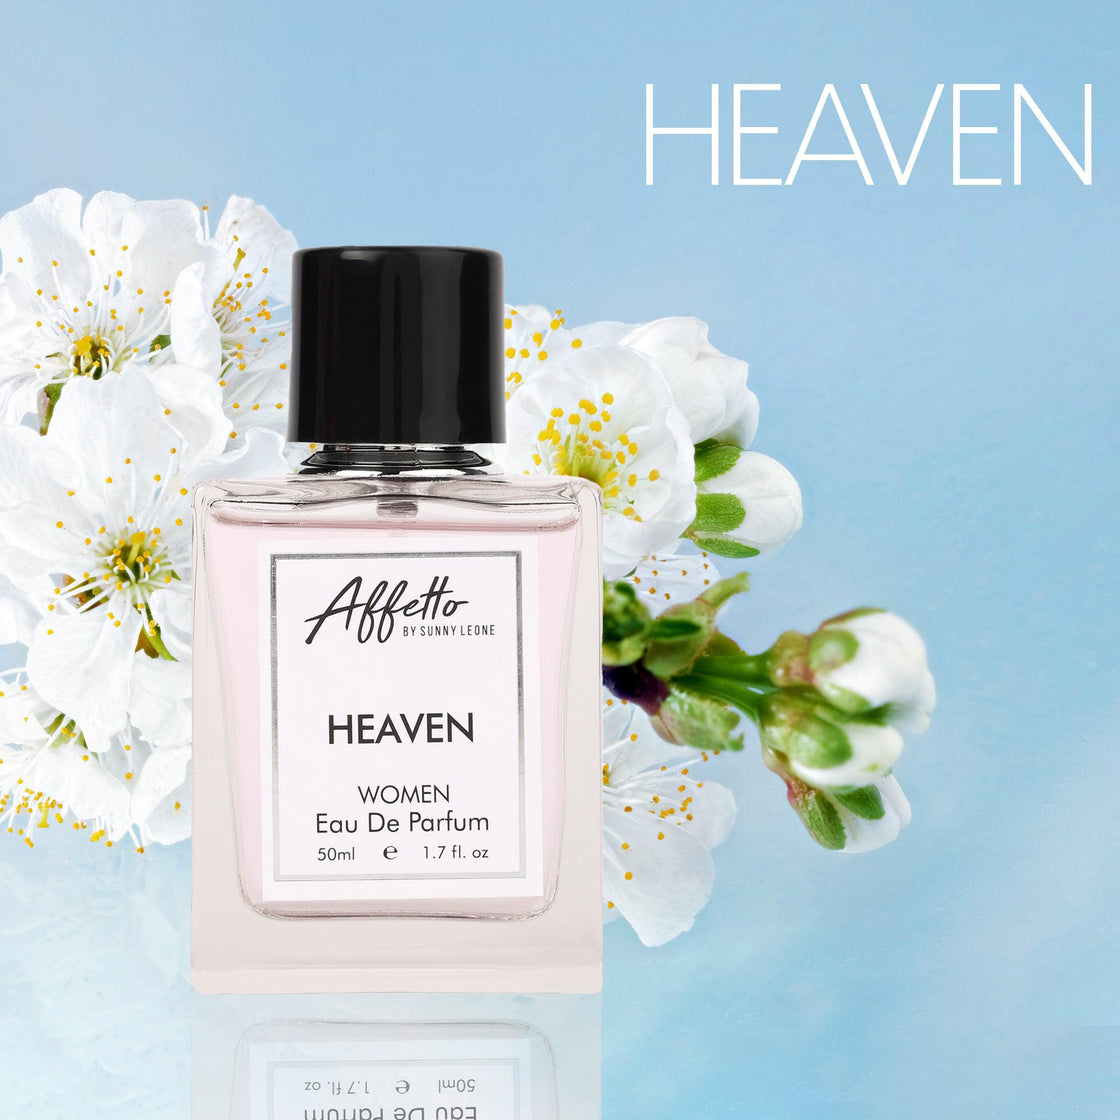 Heaven - For Her (50ml)-Perfume-cruelty free cosmetics-Sunny Leone